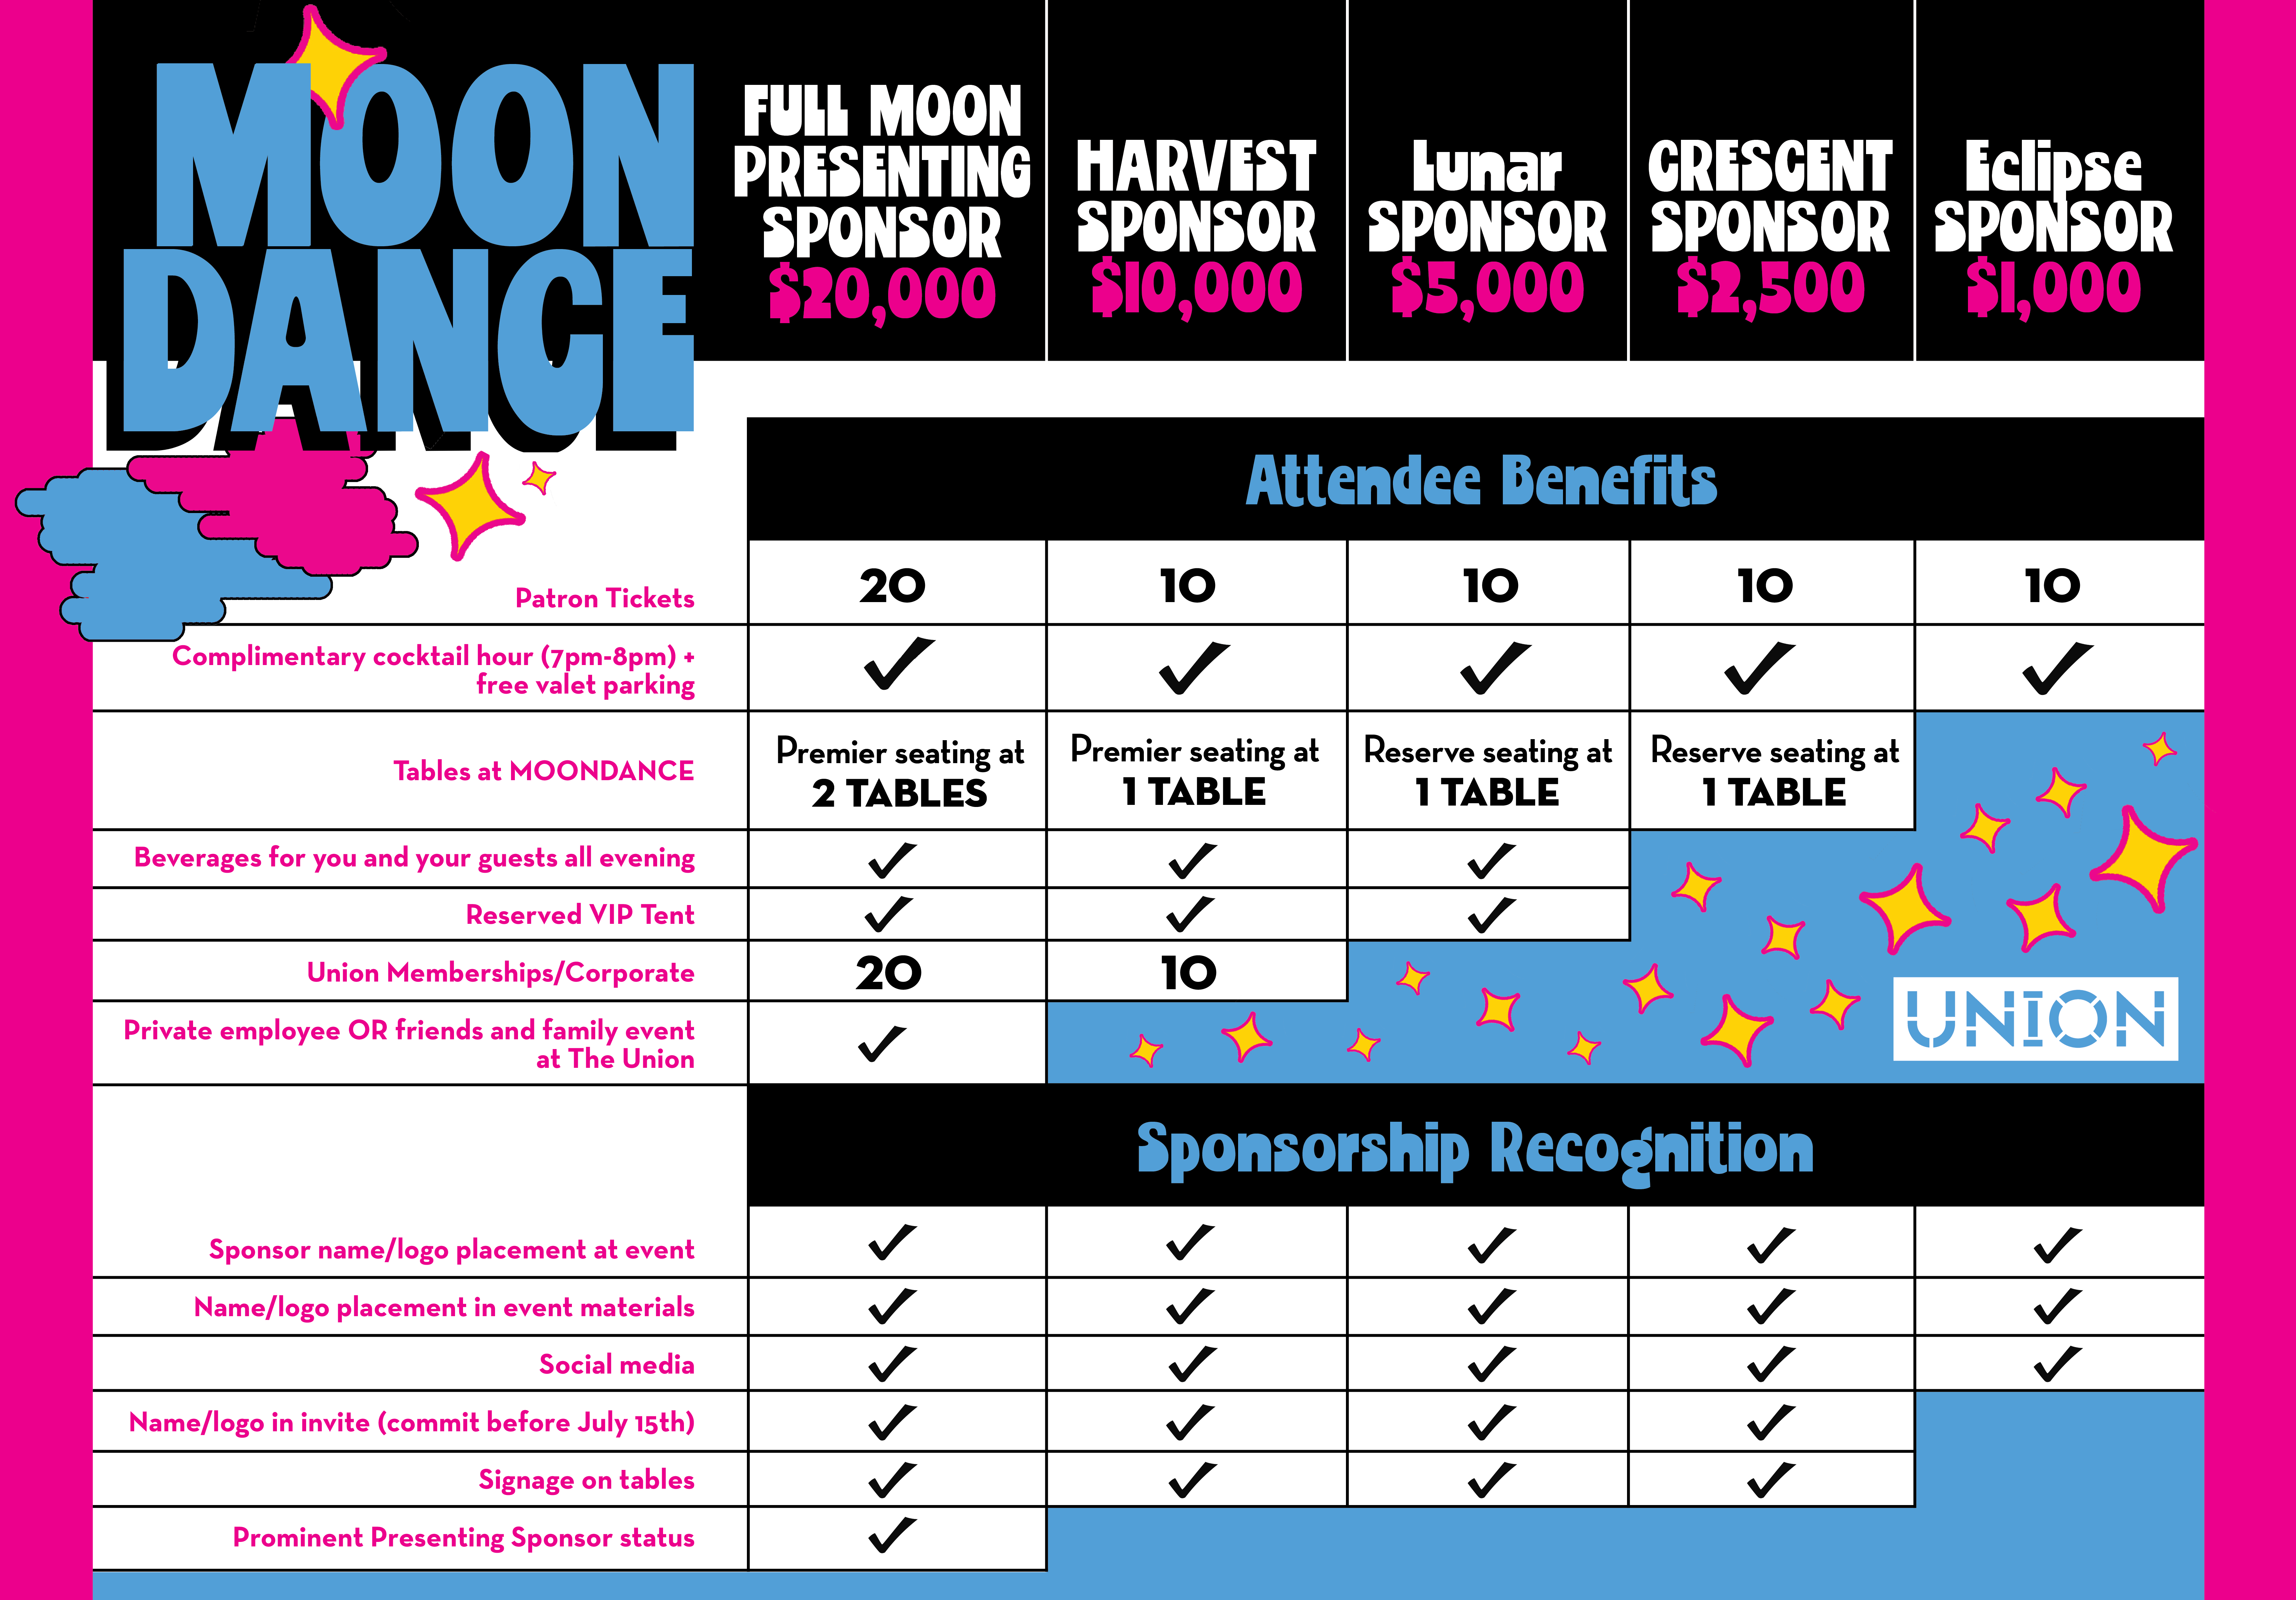 Moondance sponsorship table, outlining benefit levels for each sponsorship tier.